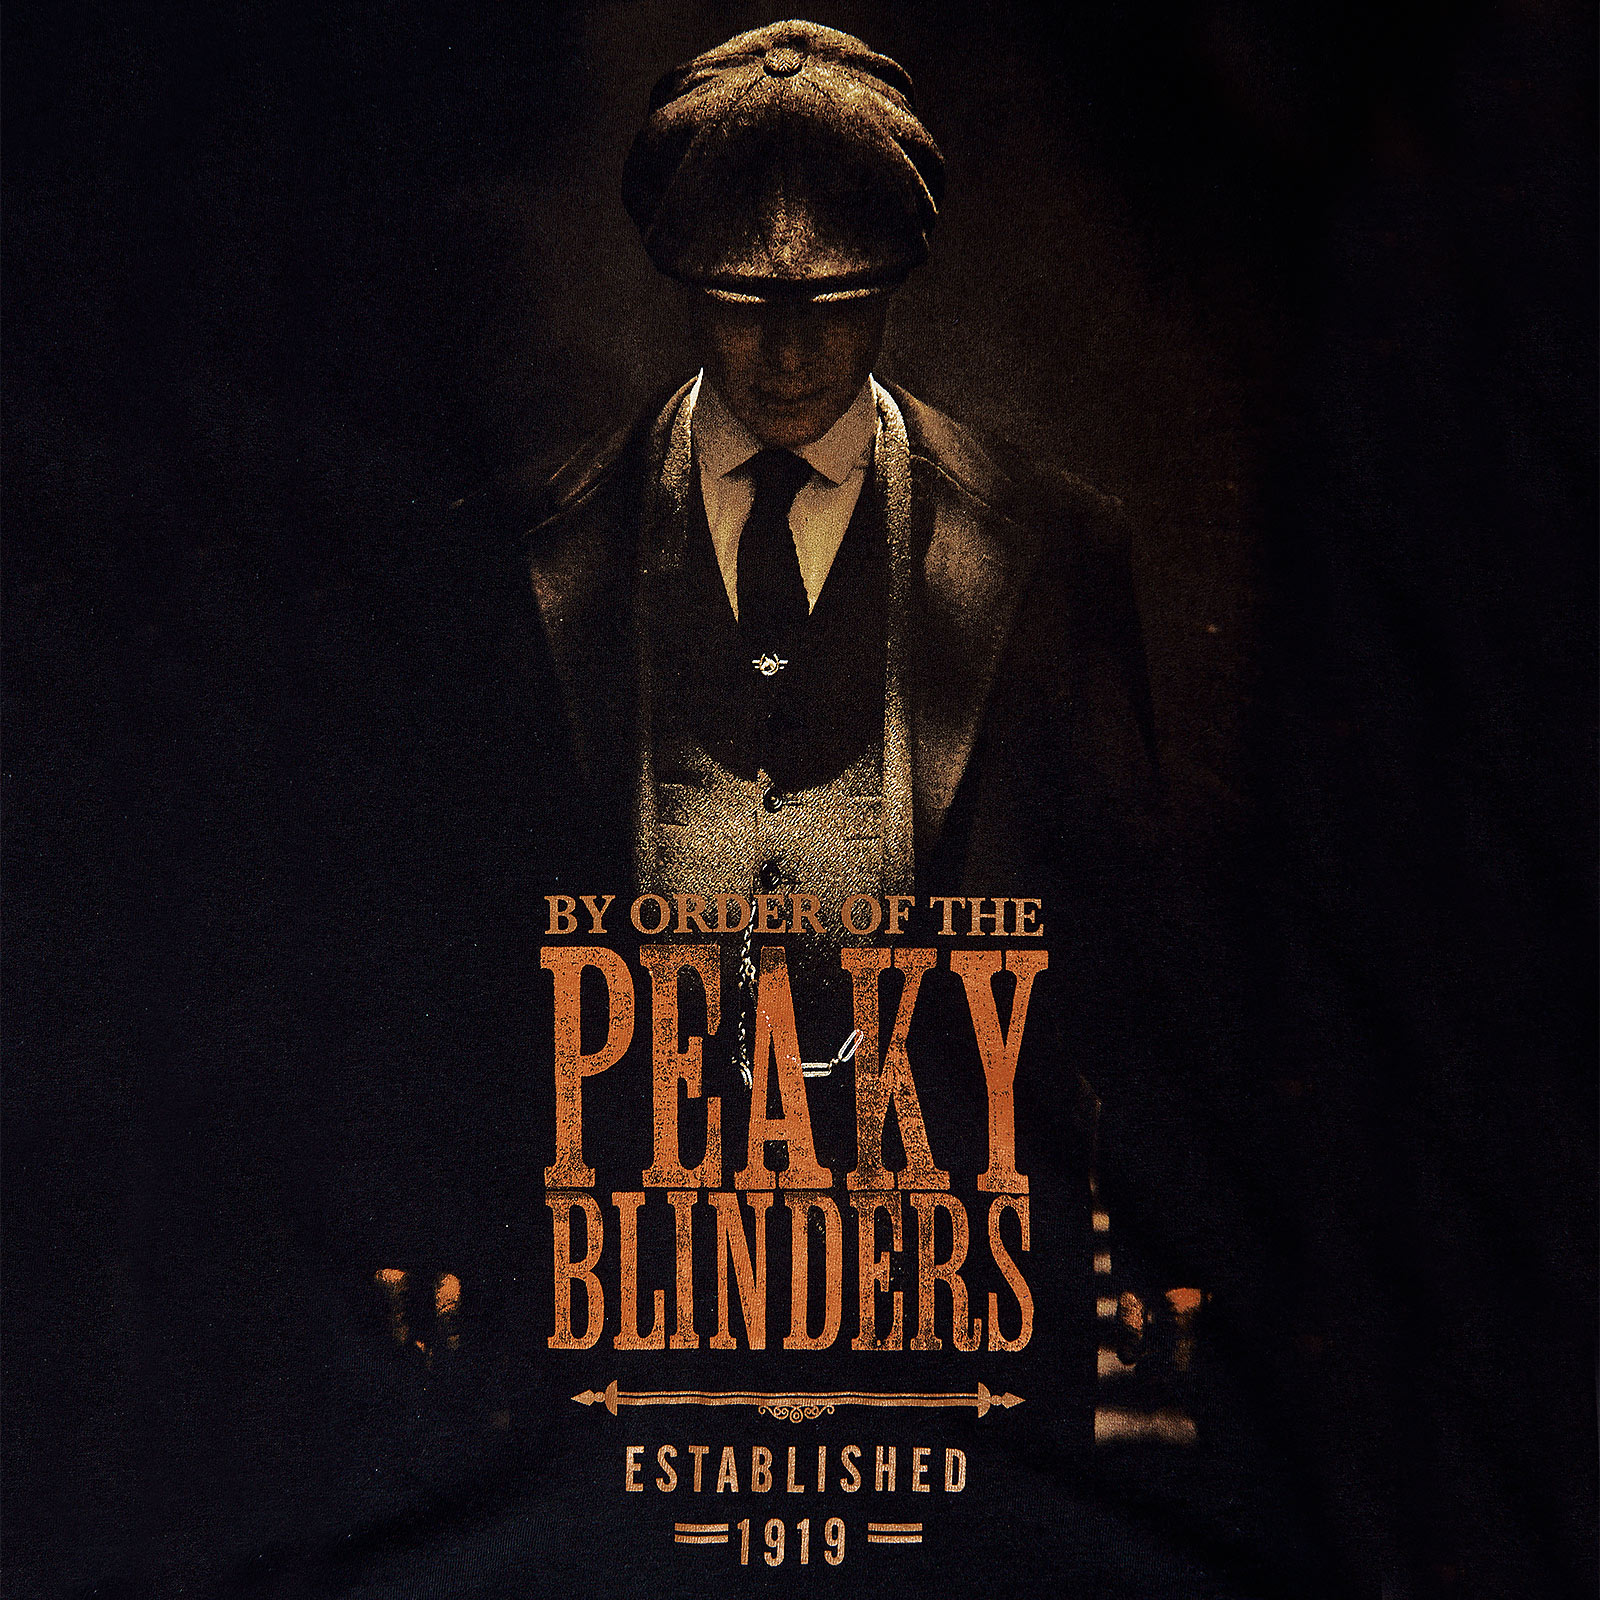 Peaky Blinders - Established 1919 T-Shirt schwarz